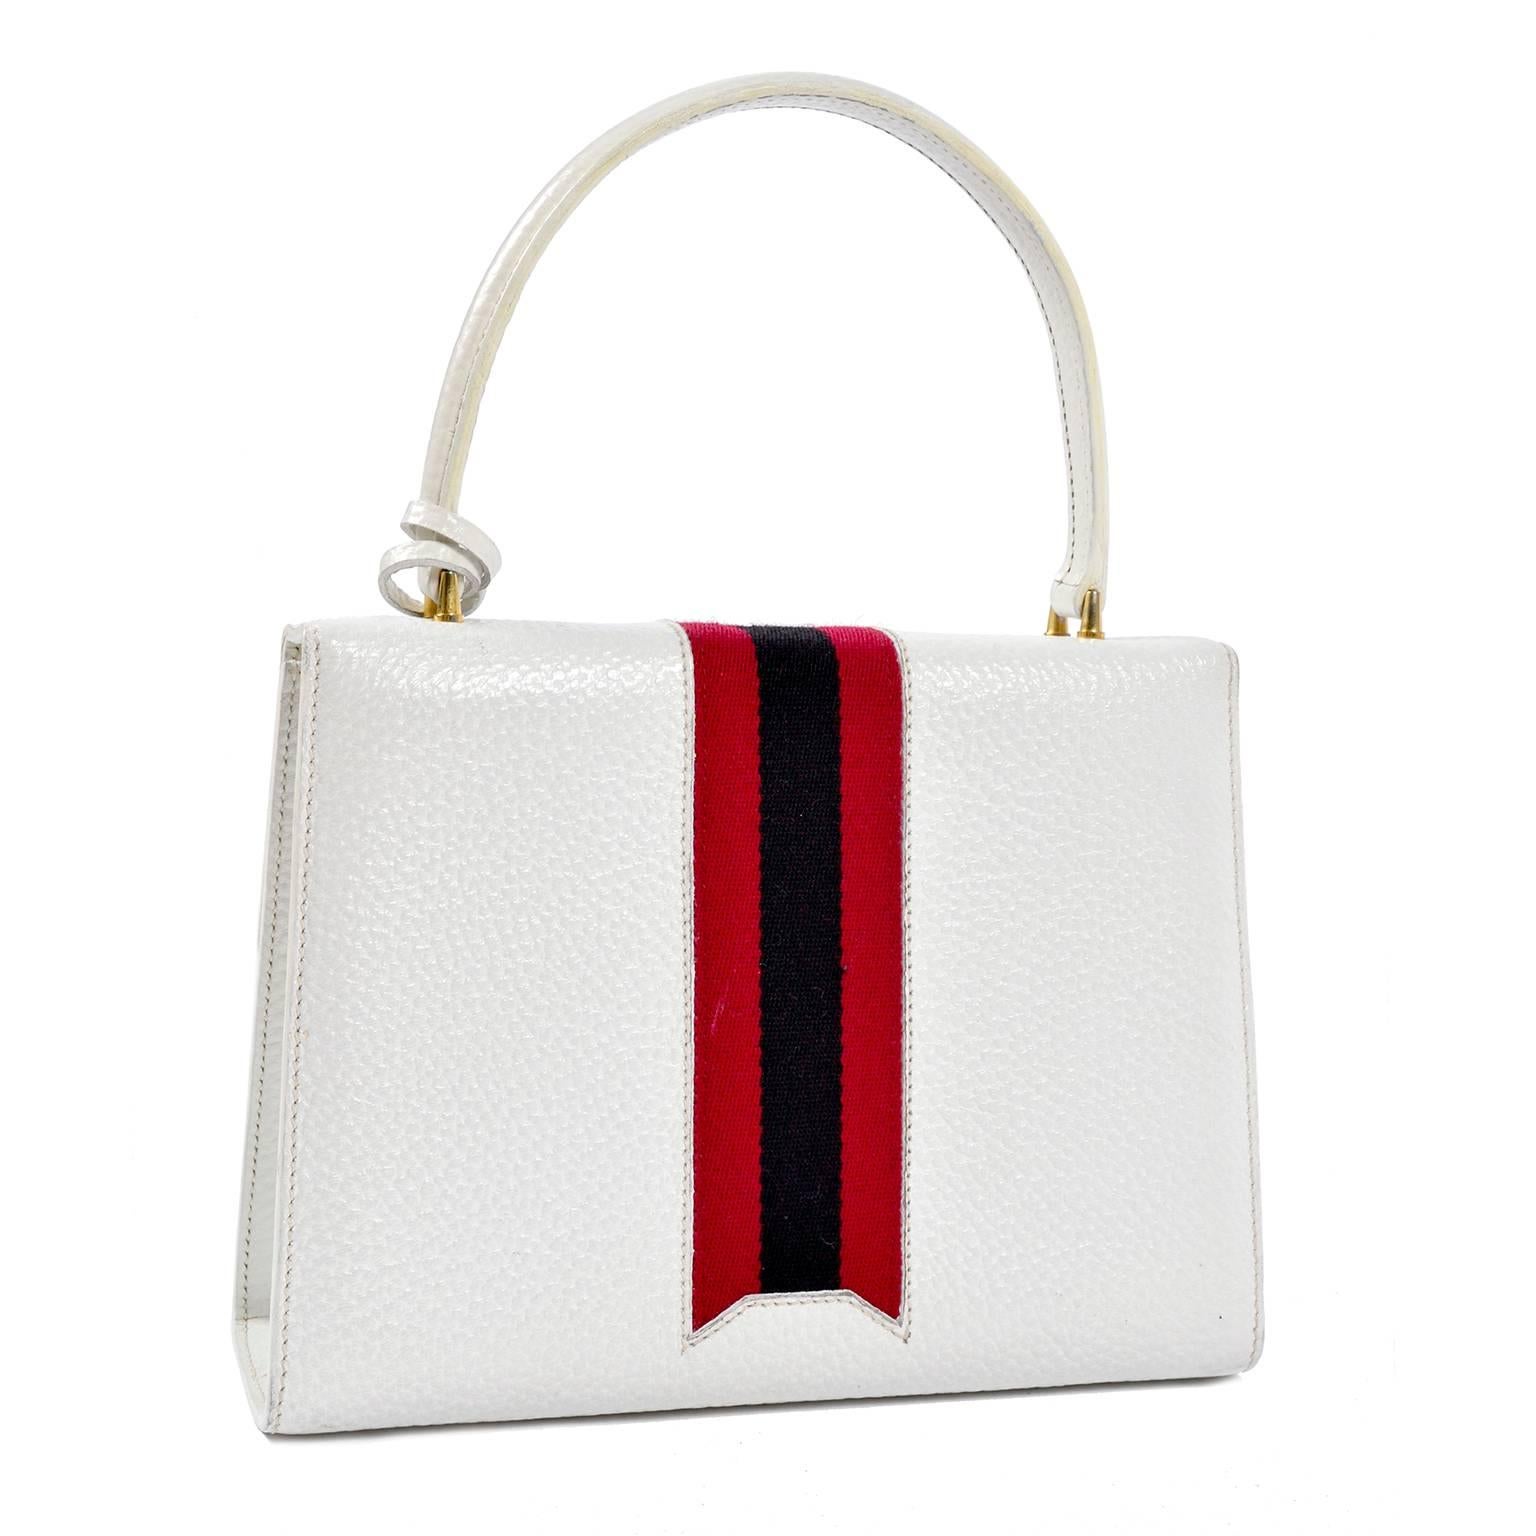 Vintage White Gucci Handbag Satchel in Leather With Stripes & Key Lock 4